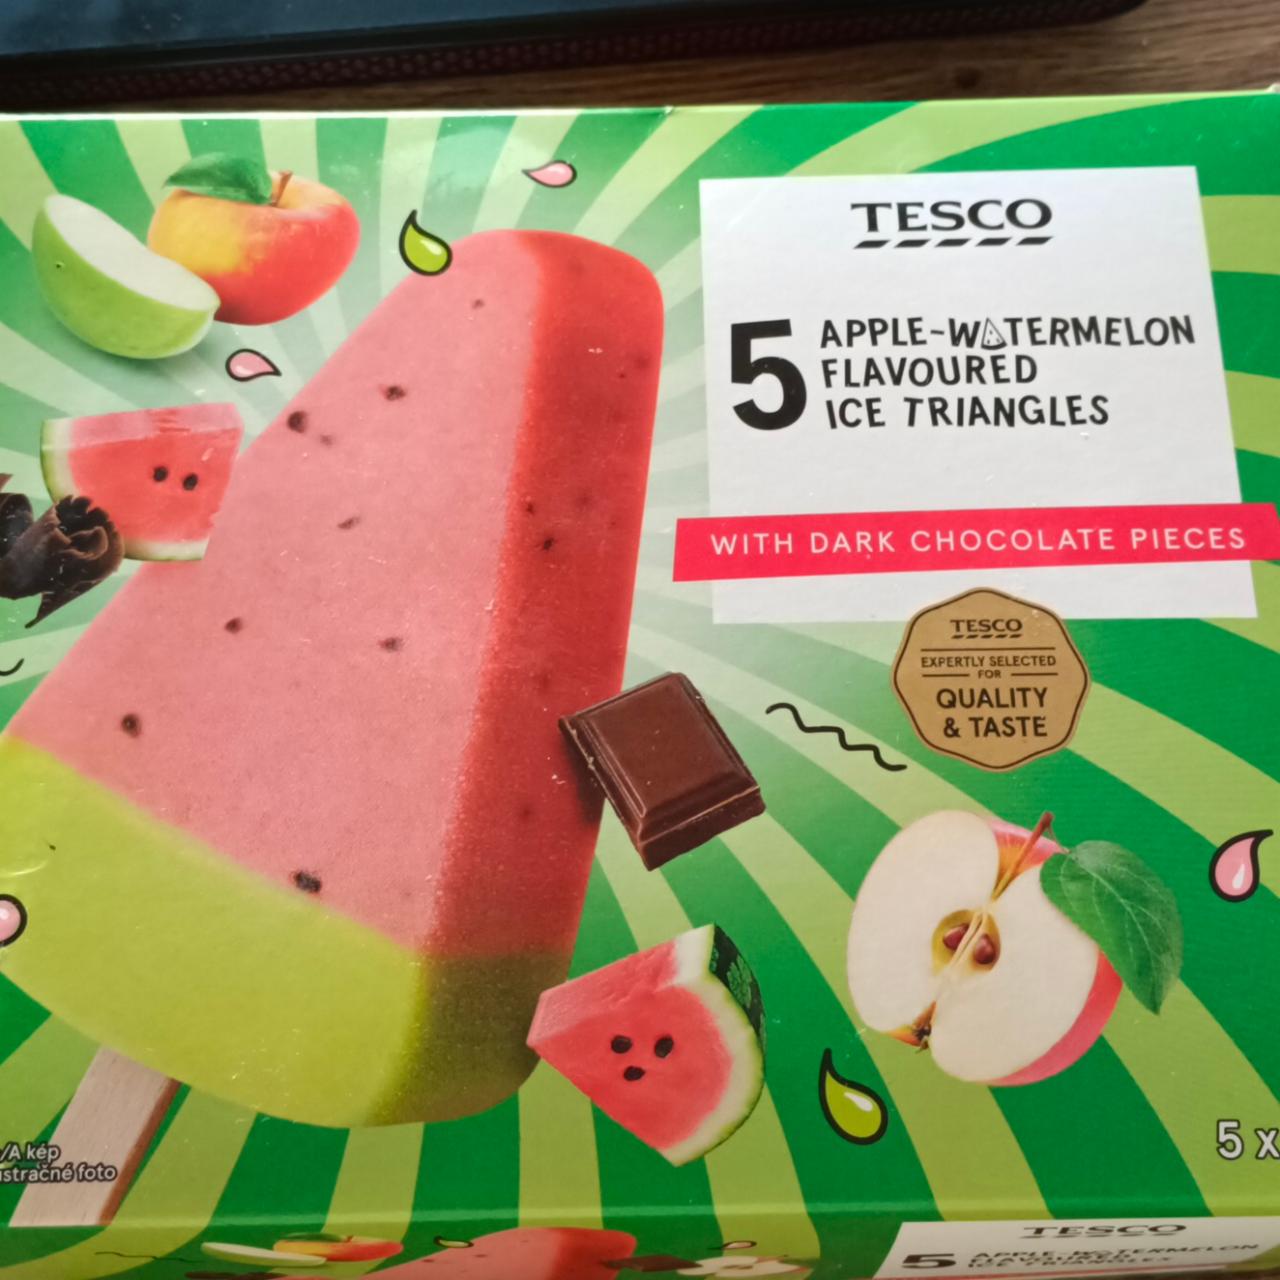 Képek - Apple-Watermelon Flavoured Ice Triangles with Dark Chocolate Pieces Tesco